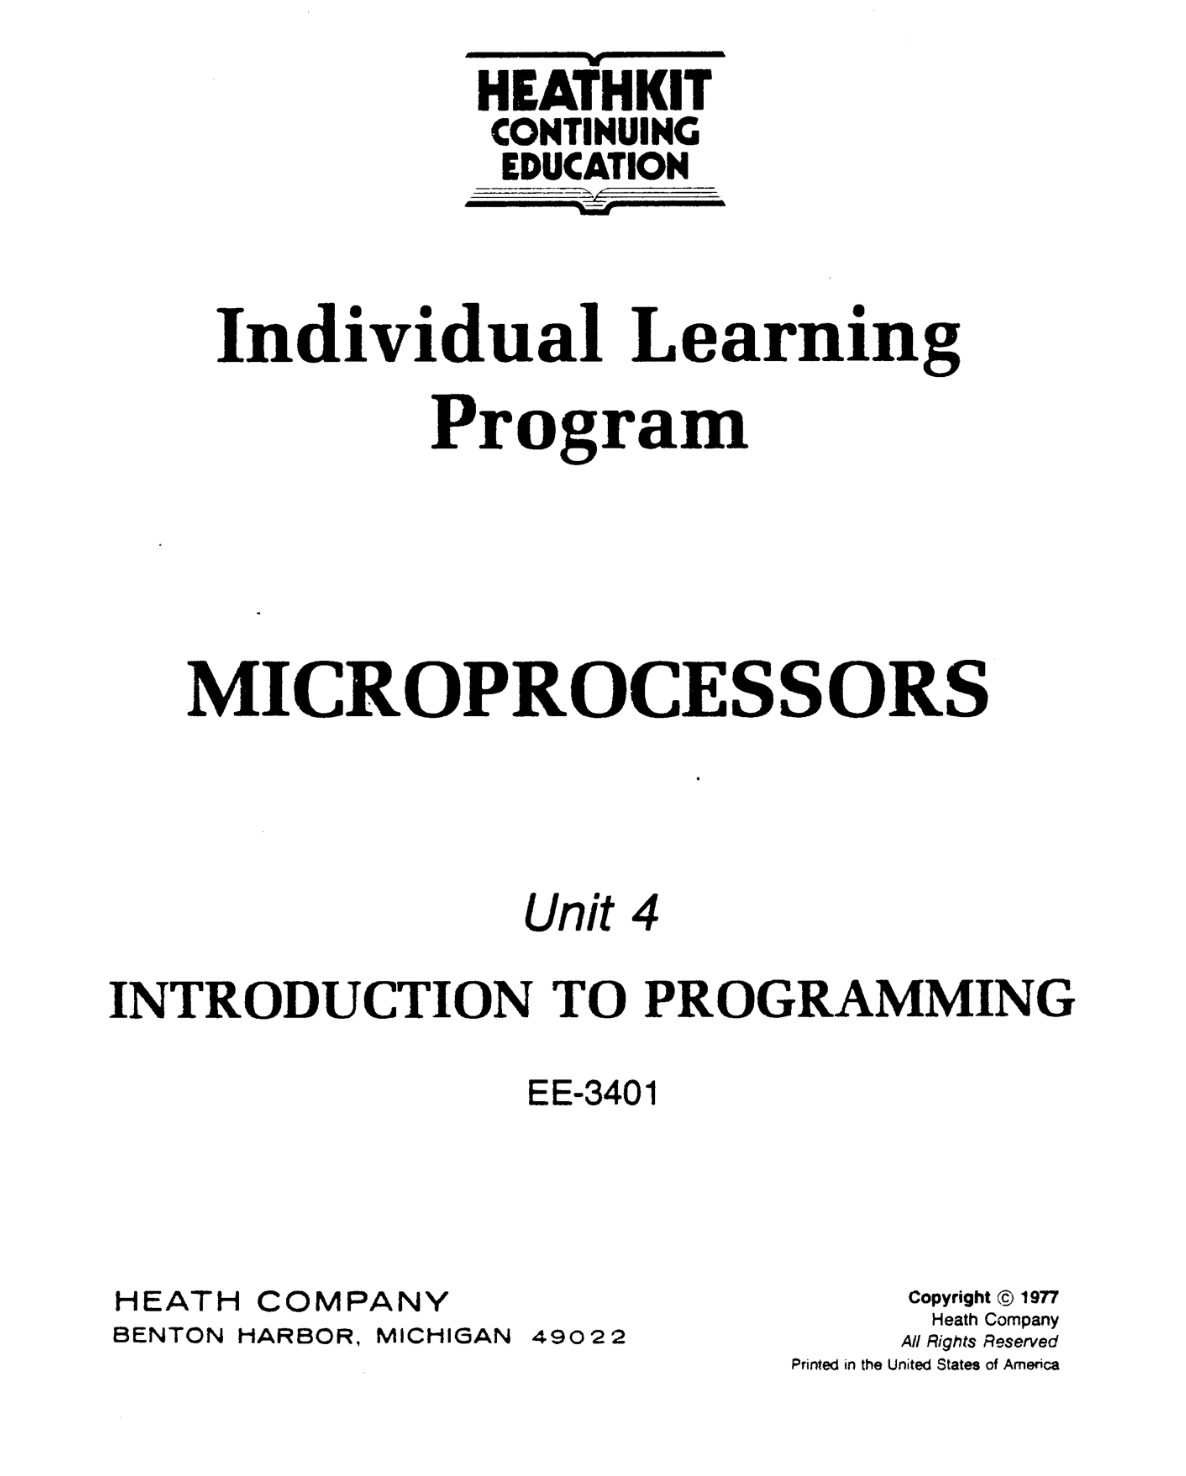 Heathkit EE-3401 Individual Learning Program - Unit 04 - Introduction to Programming